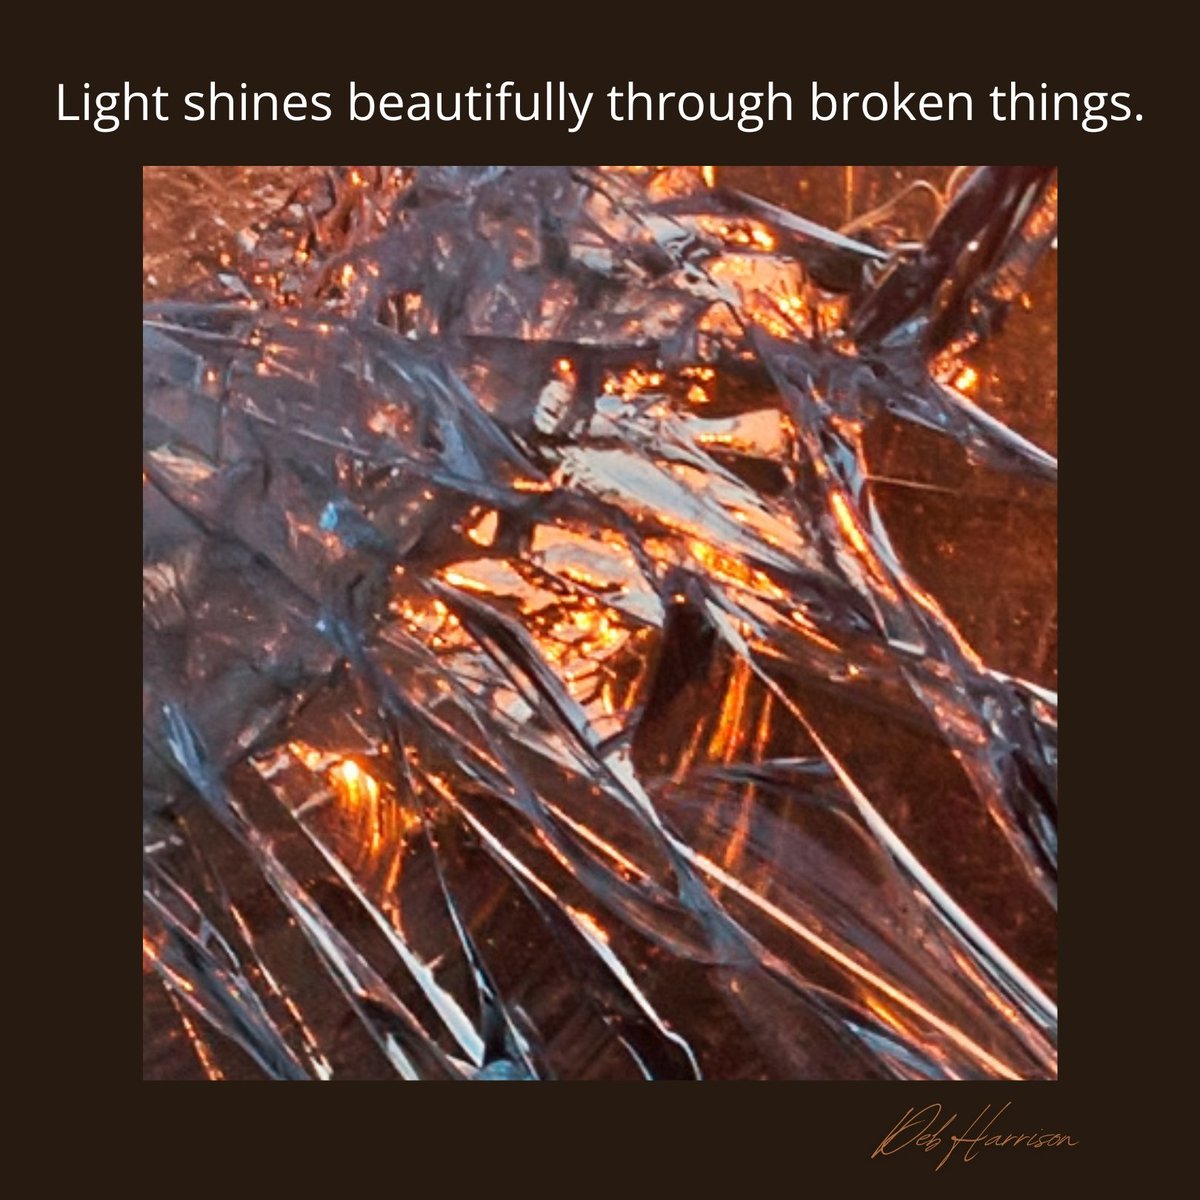 Light shines beautifully through broken things. Shine your light.

#beautifullife #youmatter #youarebeautiful #youarebeautifuljustthewayyouare #shineyourlight #onthispath